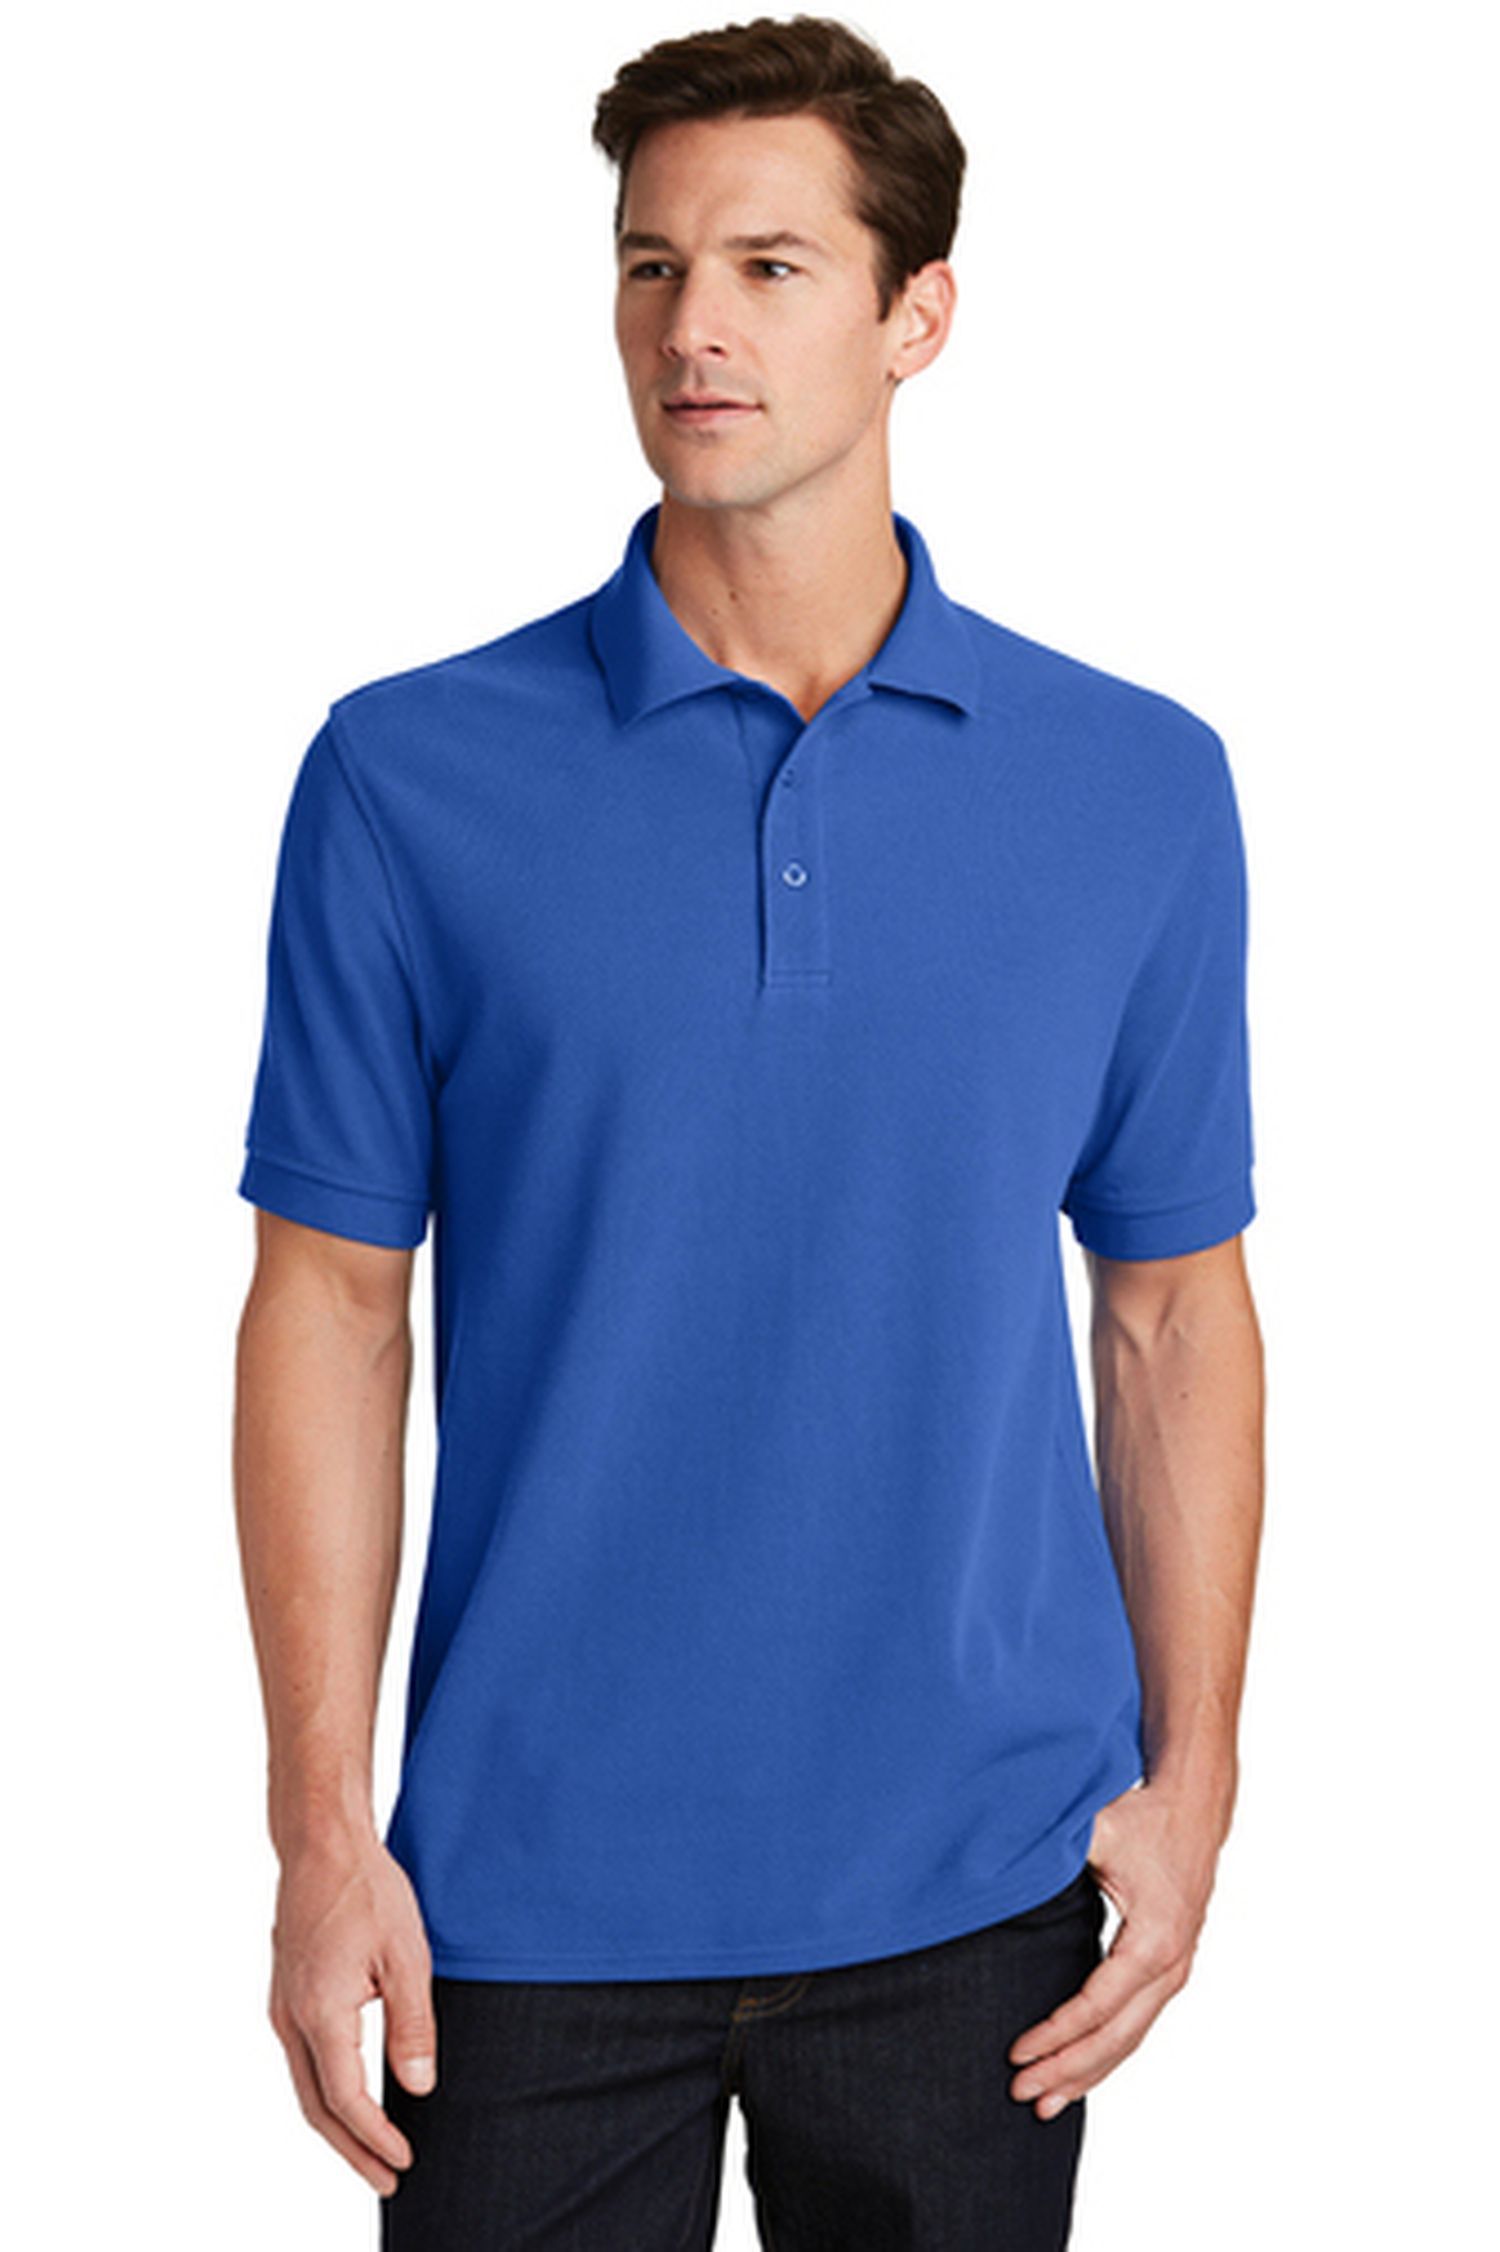 Port & Company® Adult Unisex 5.9oz 100% Combed Ring Spun Pique Polo Shirt